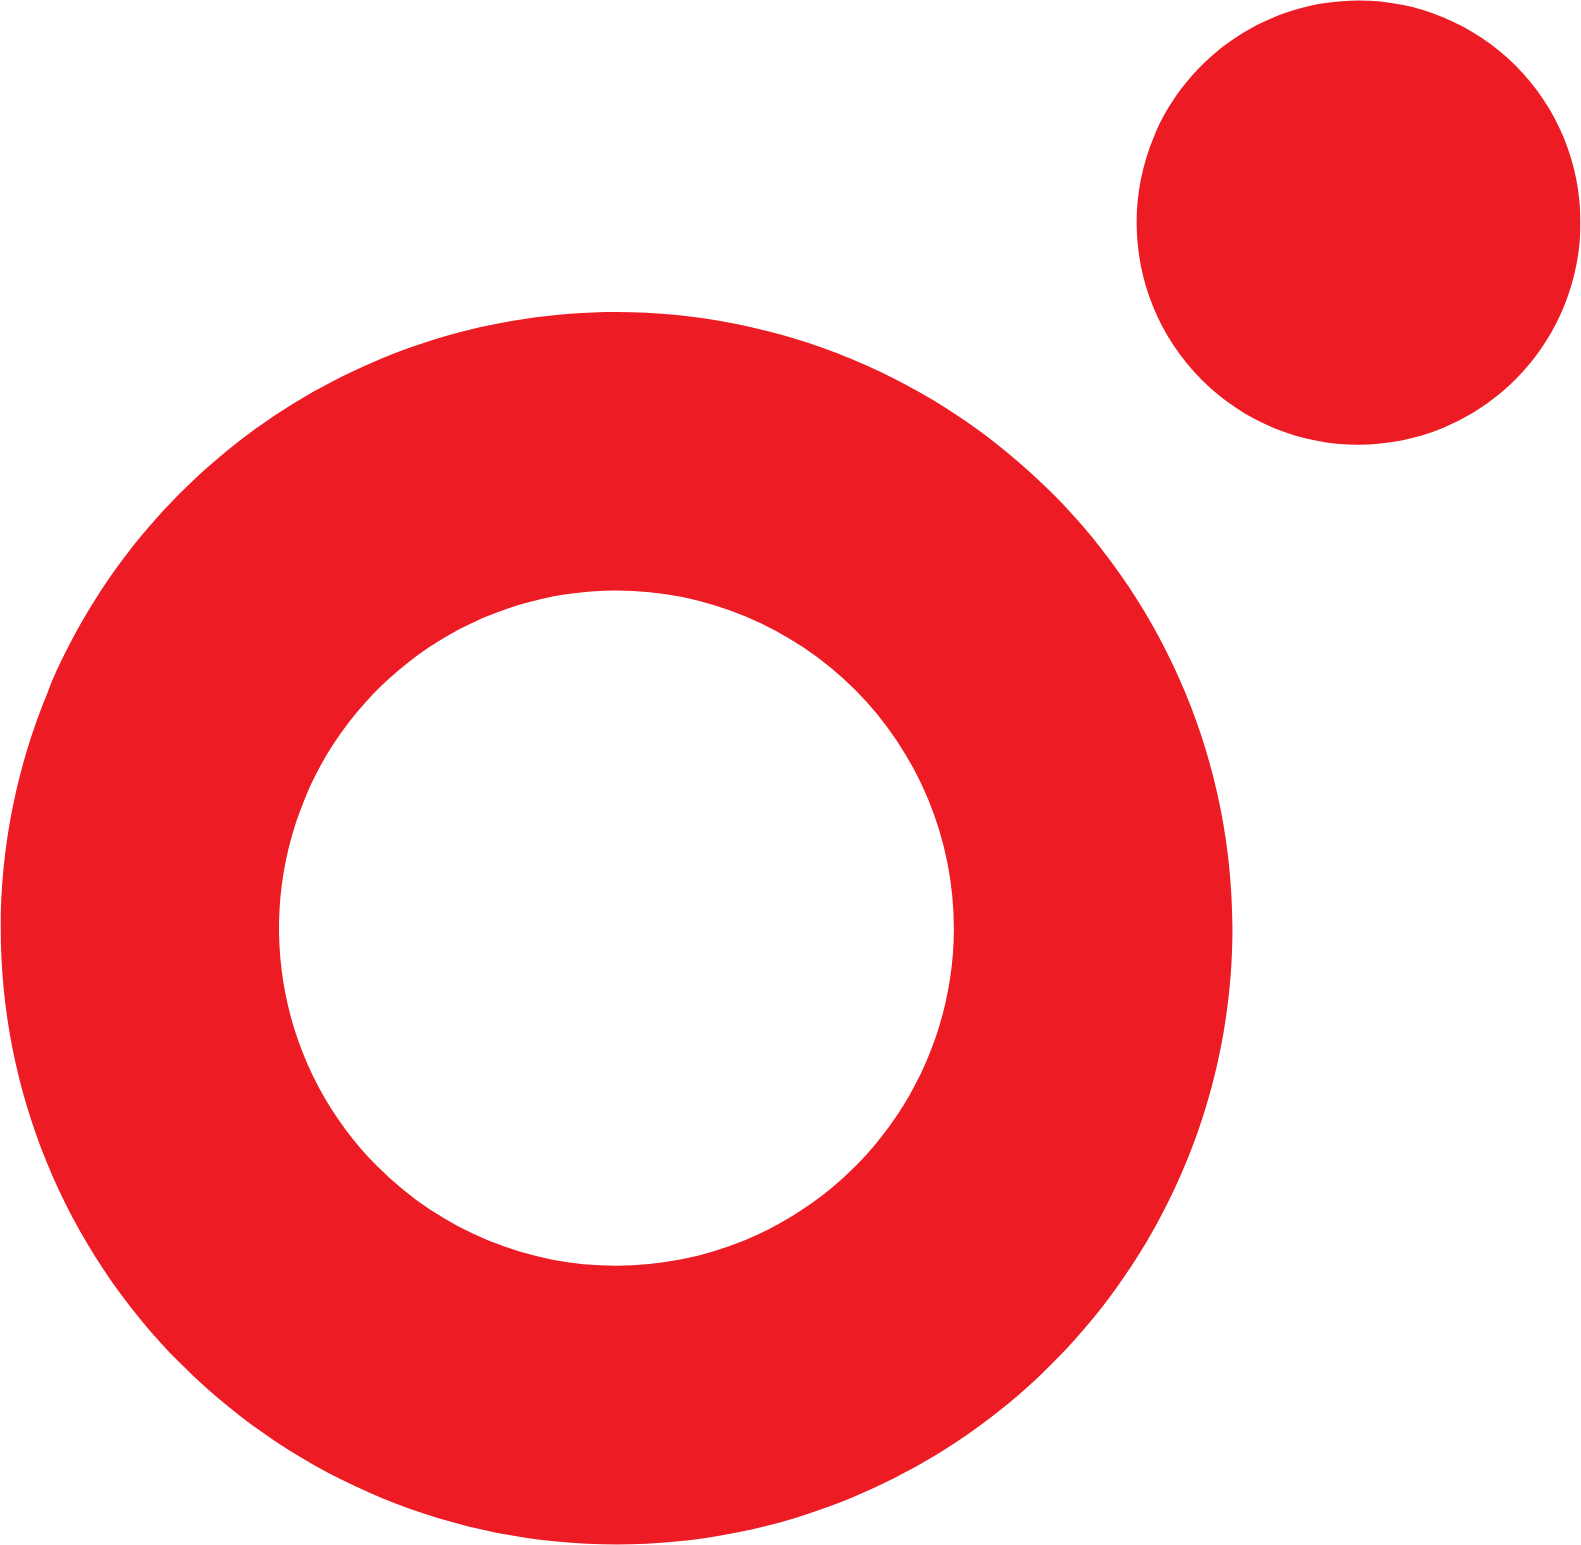 National Mobile Telecommunications Company logo (transparent PNG)